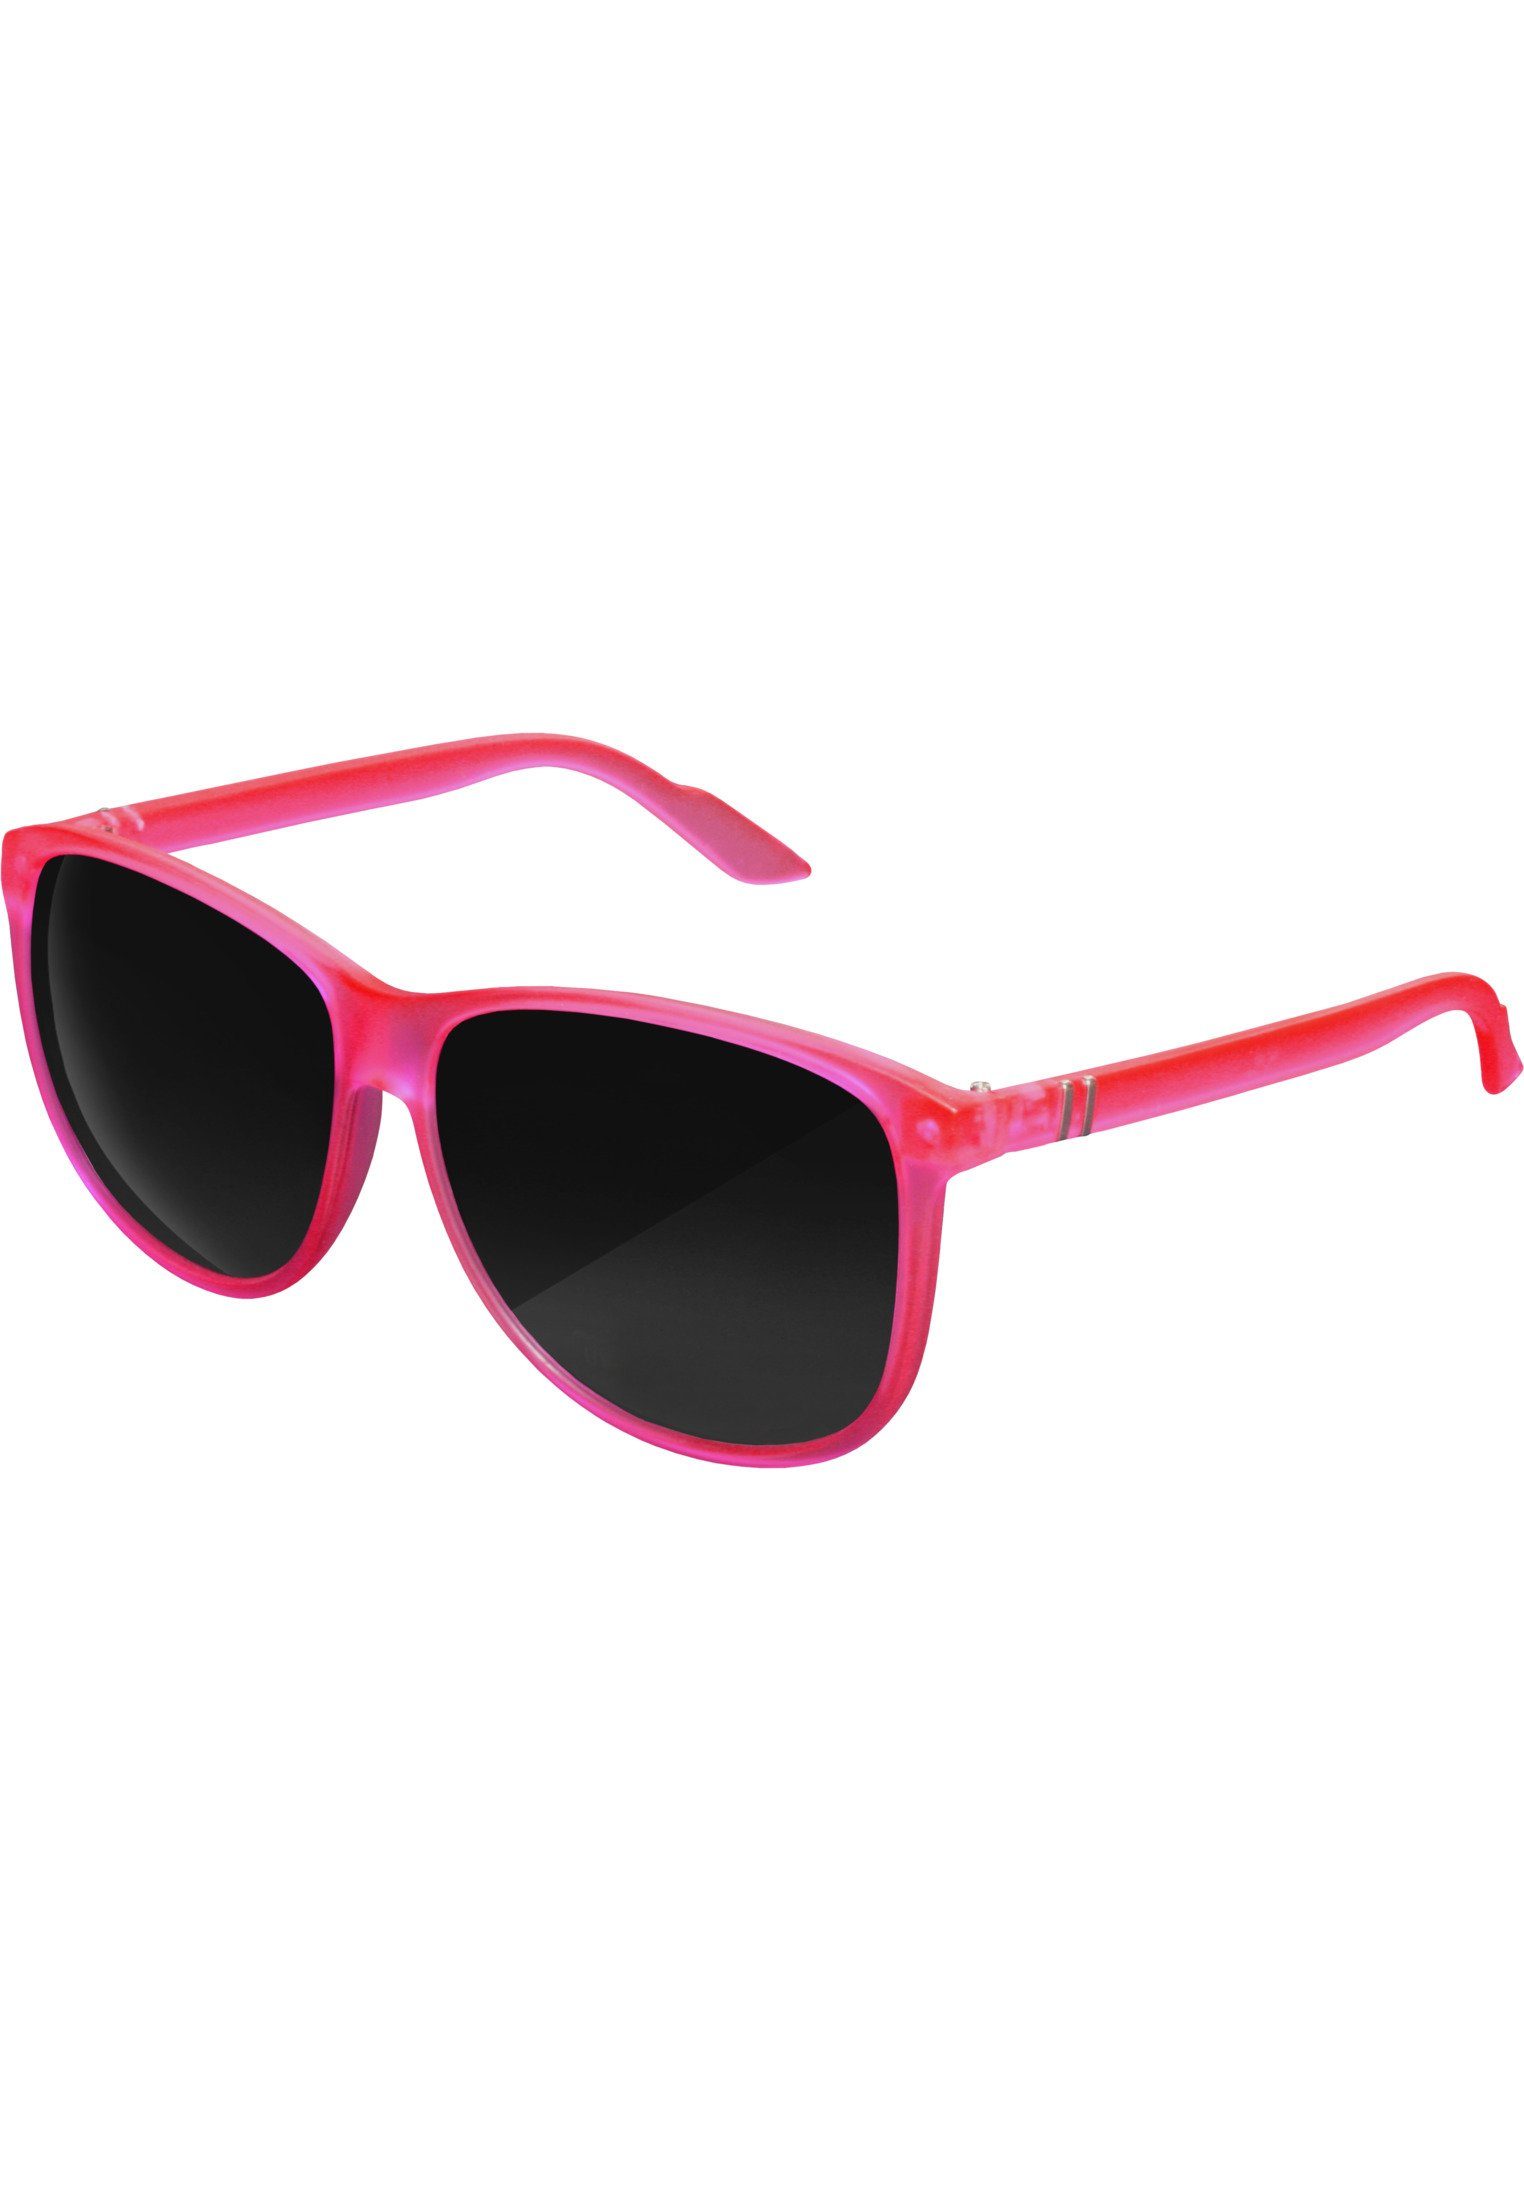 MSTRDS Sonnenbrille Accessoires Sunglasses Chirwa neonpink